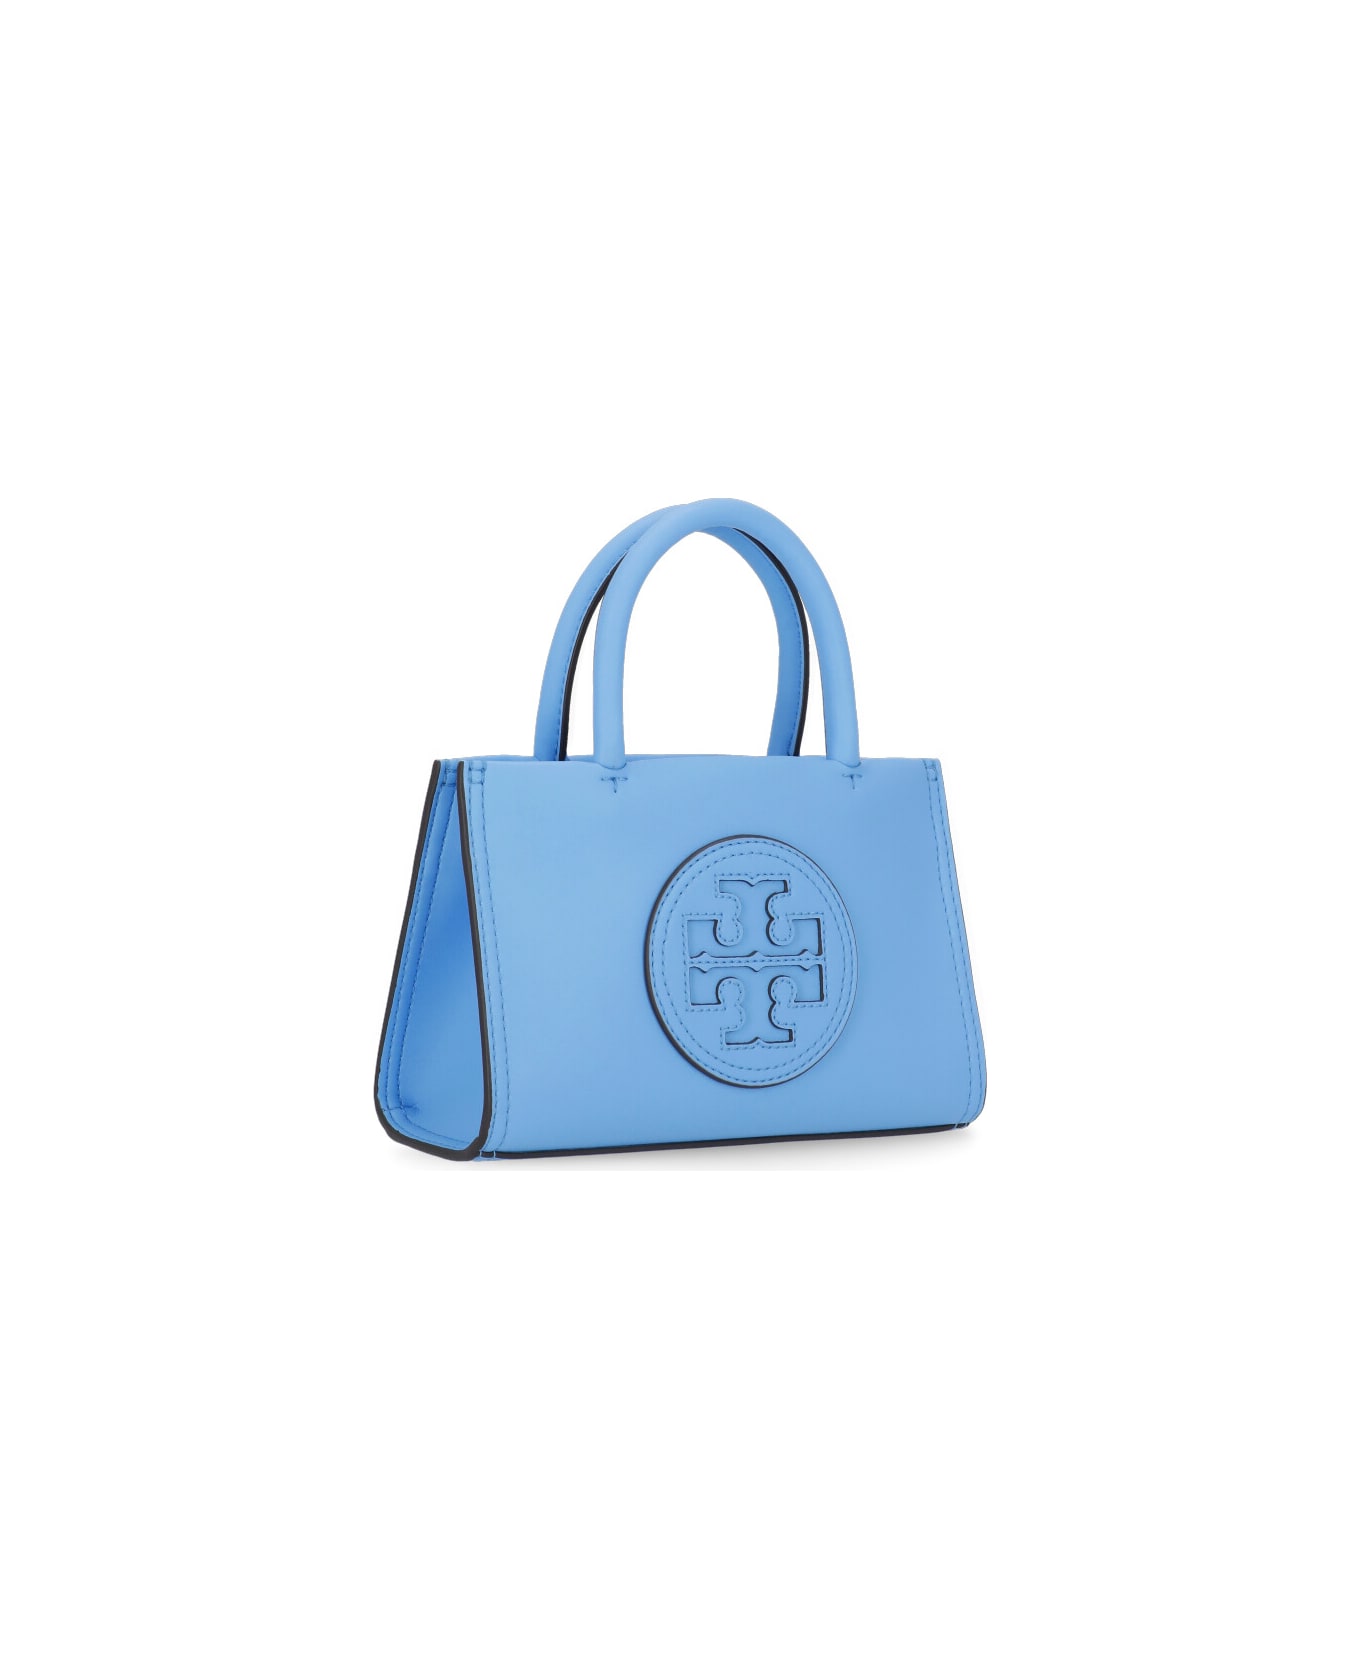 Tory Burch Ella Mini Handbag - Blue Azure